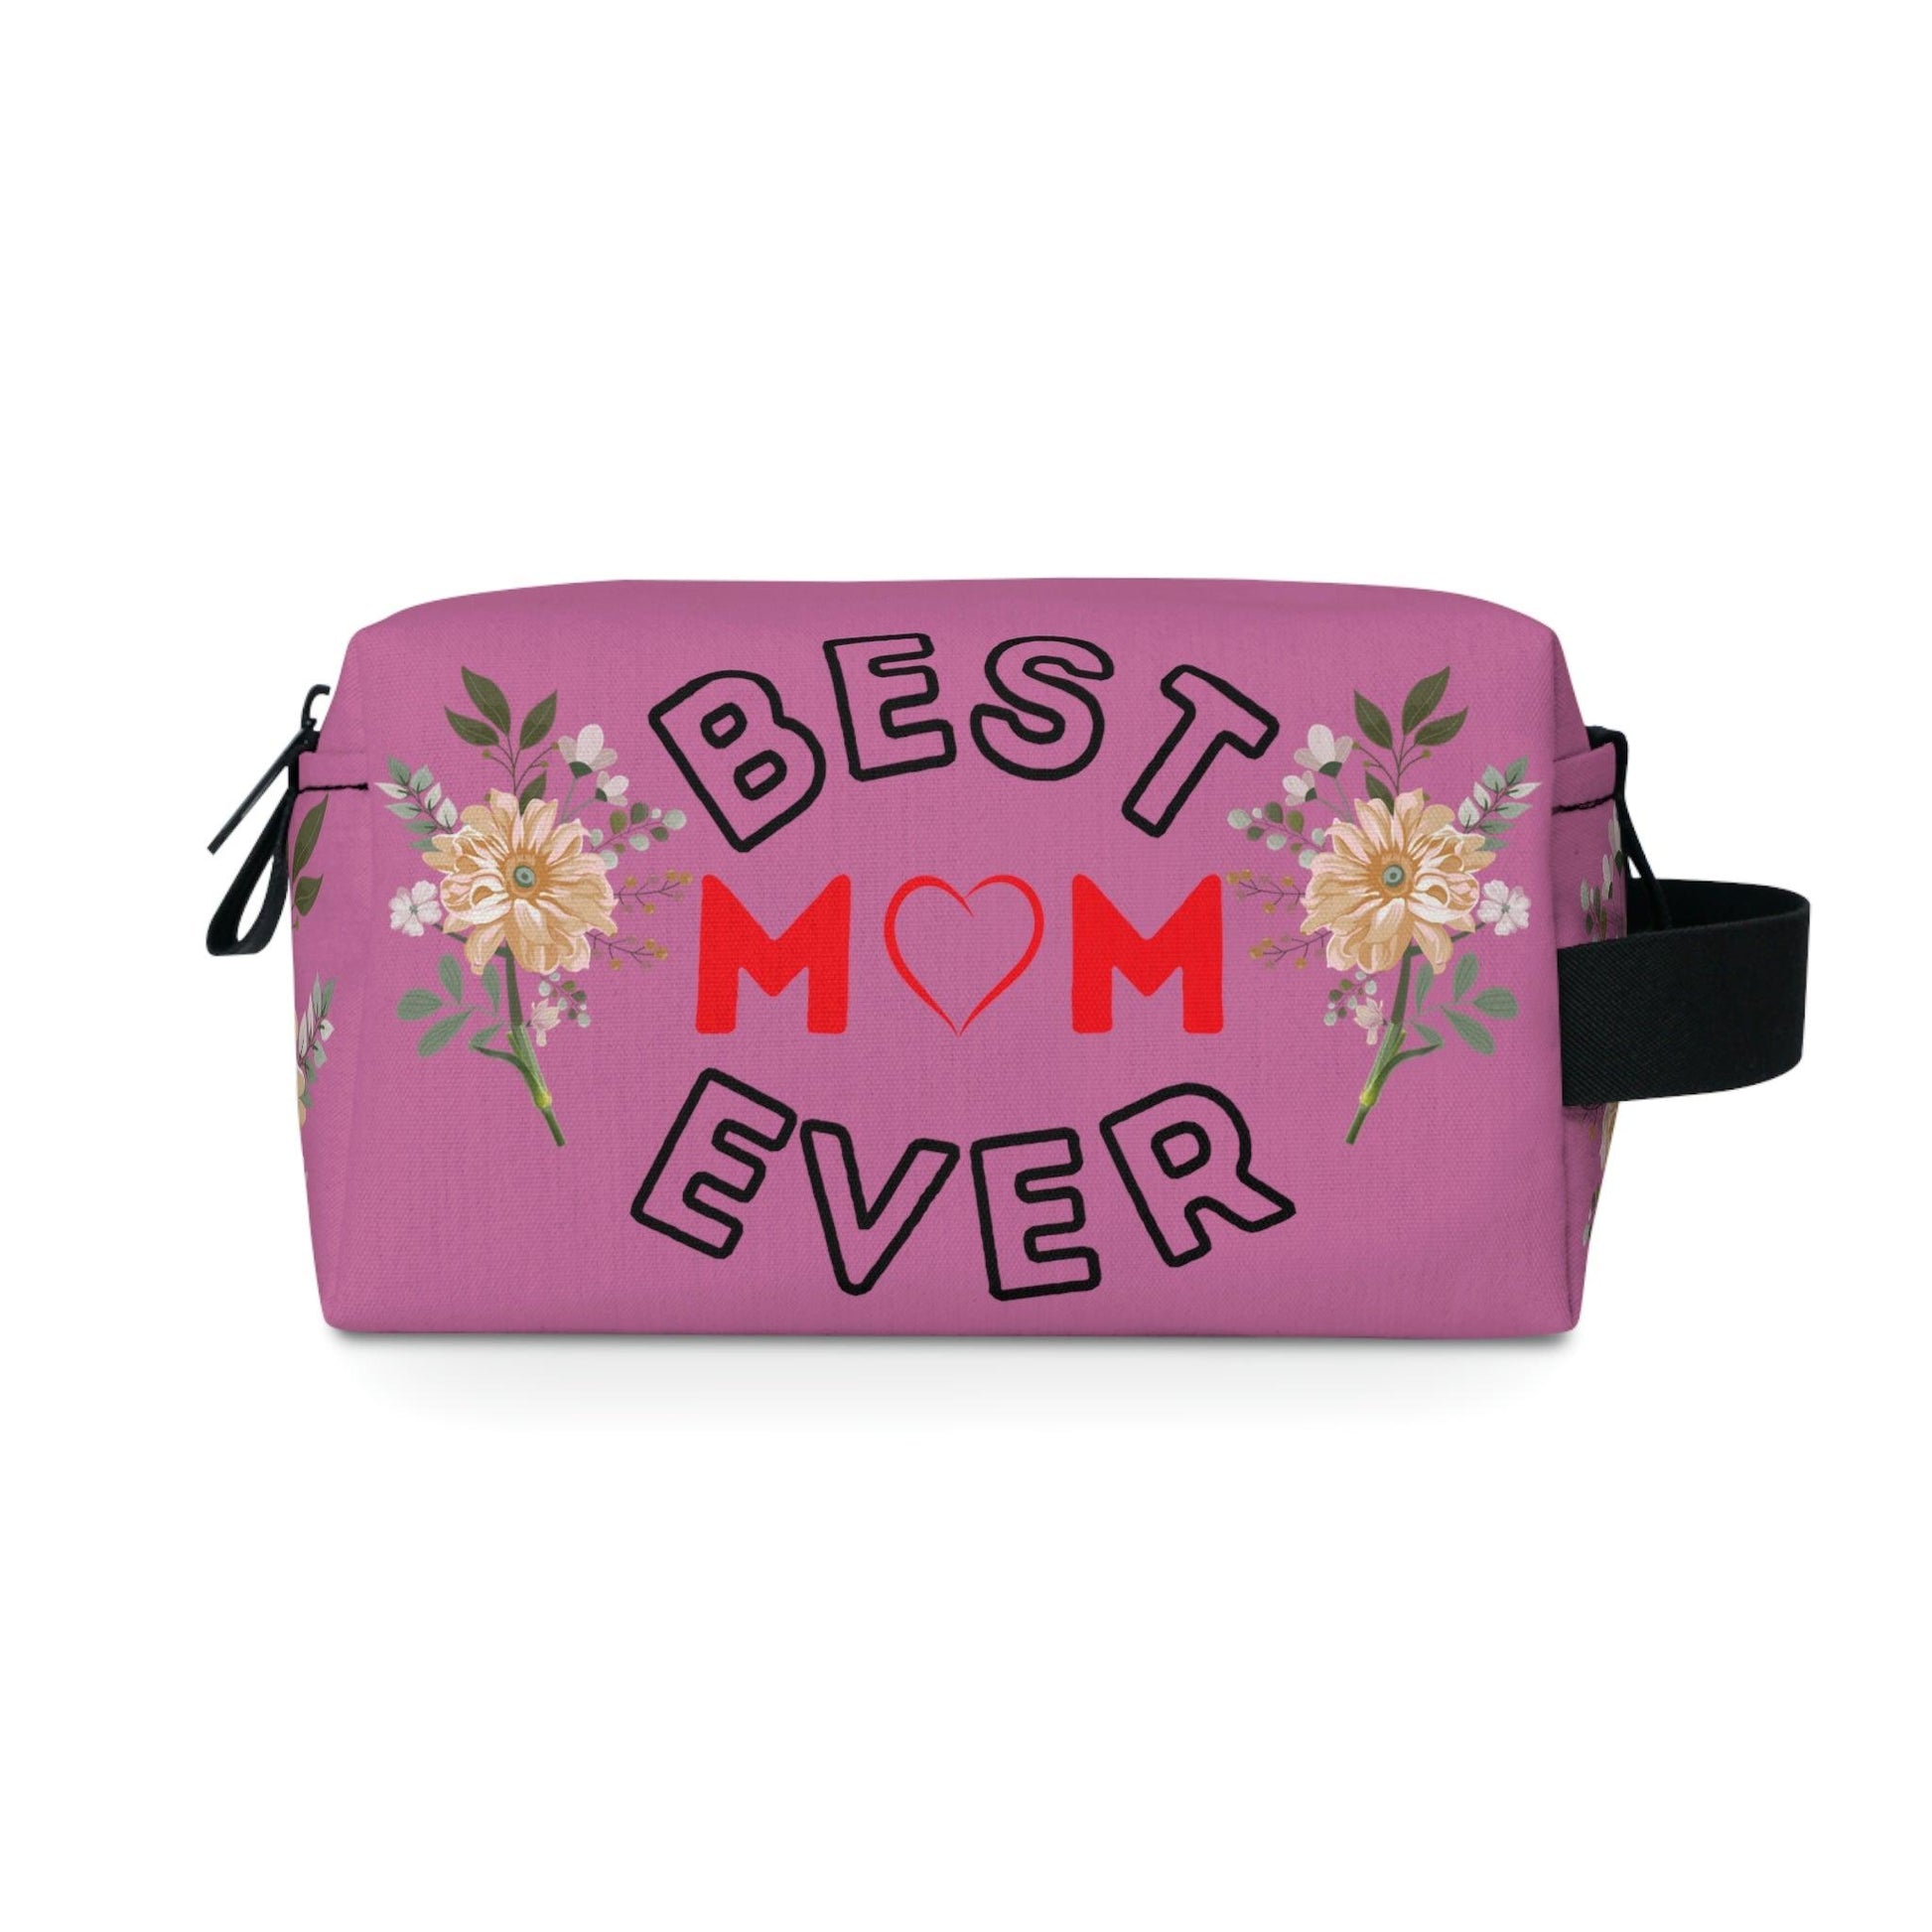 Travel Cosmetic Bag | Travel bag | Toiletry Bag Women | Best Mom Ever Makeup Bag | Cute makeup bag | Makeup pouch | Aesthetic makeup bag - Giftsmojo